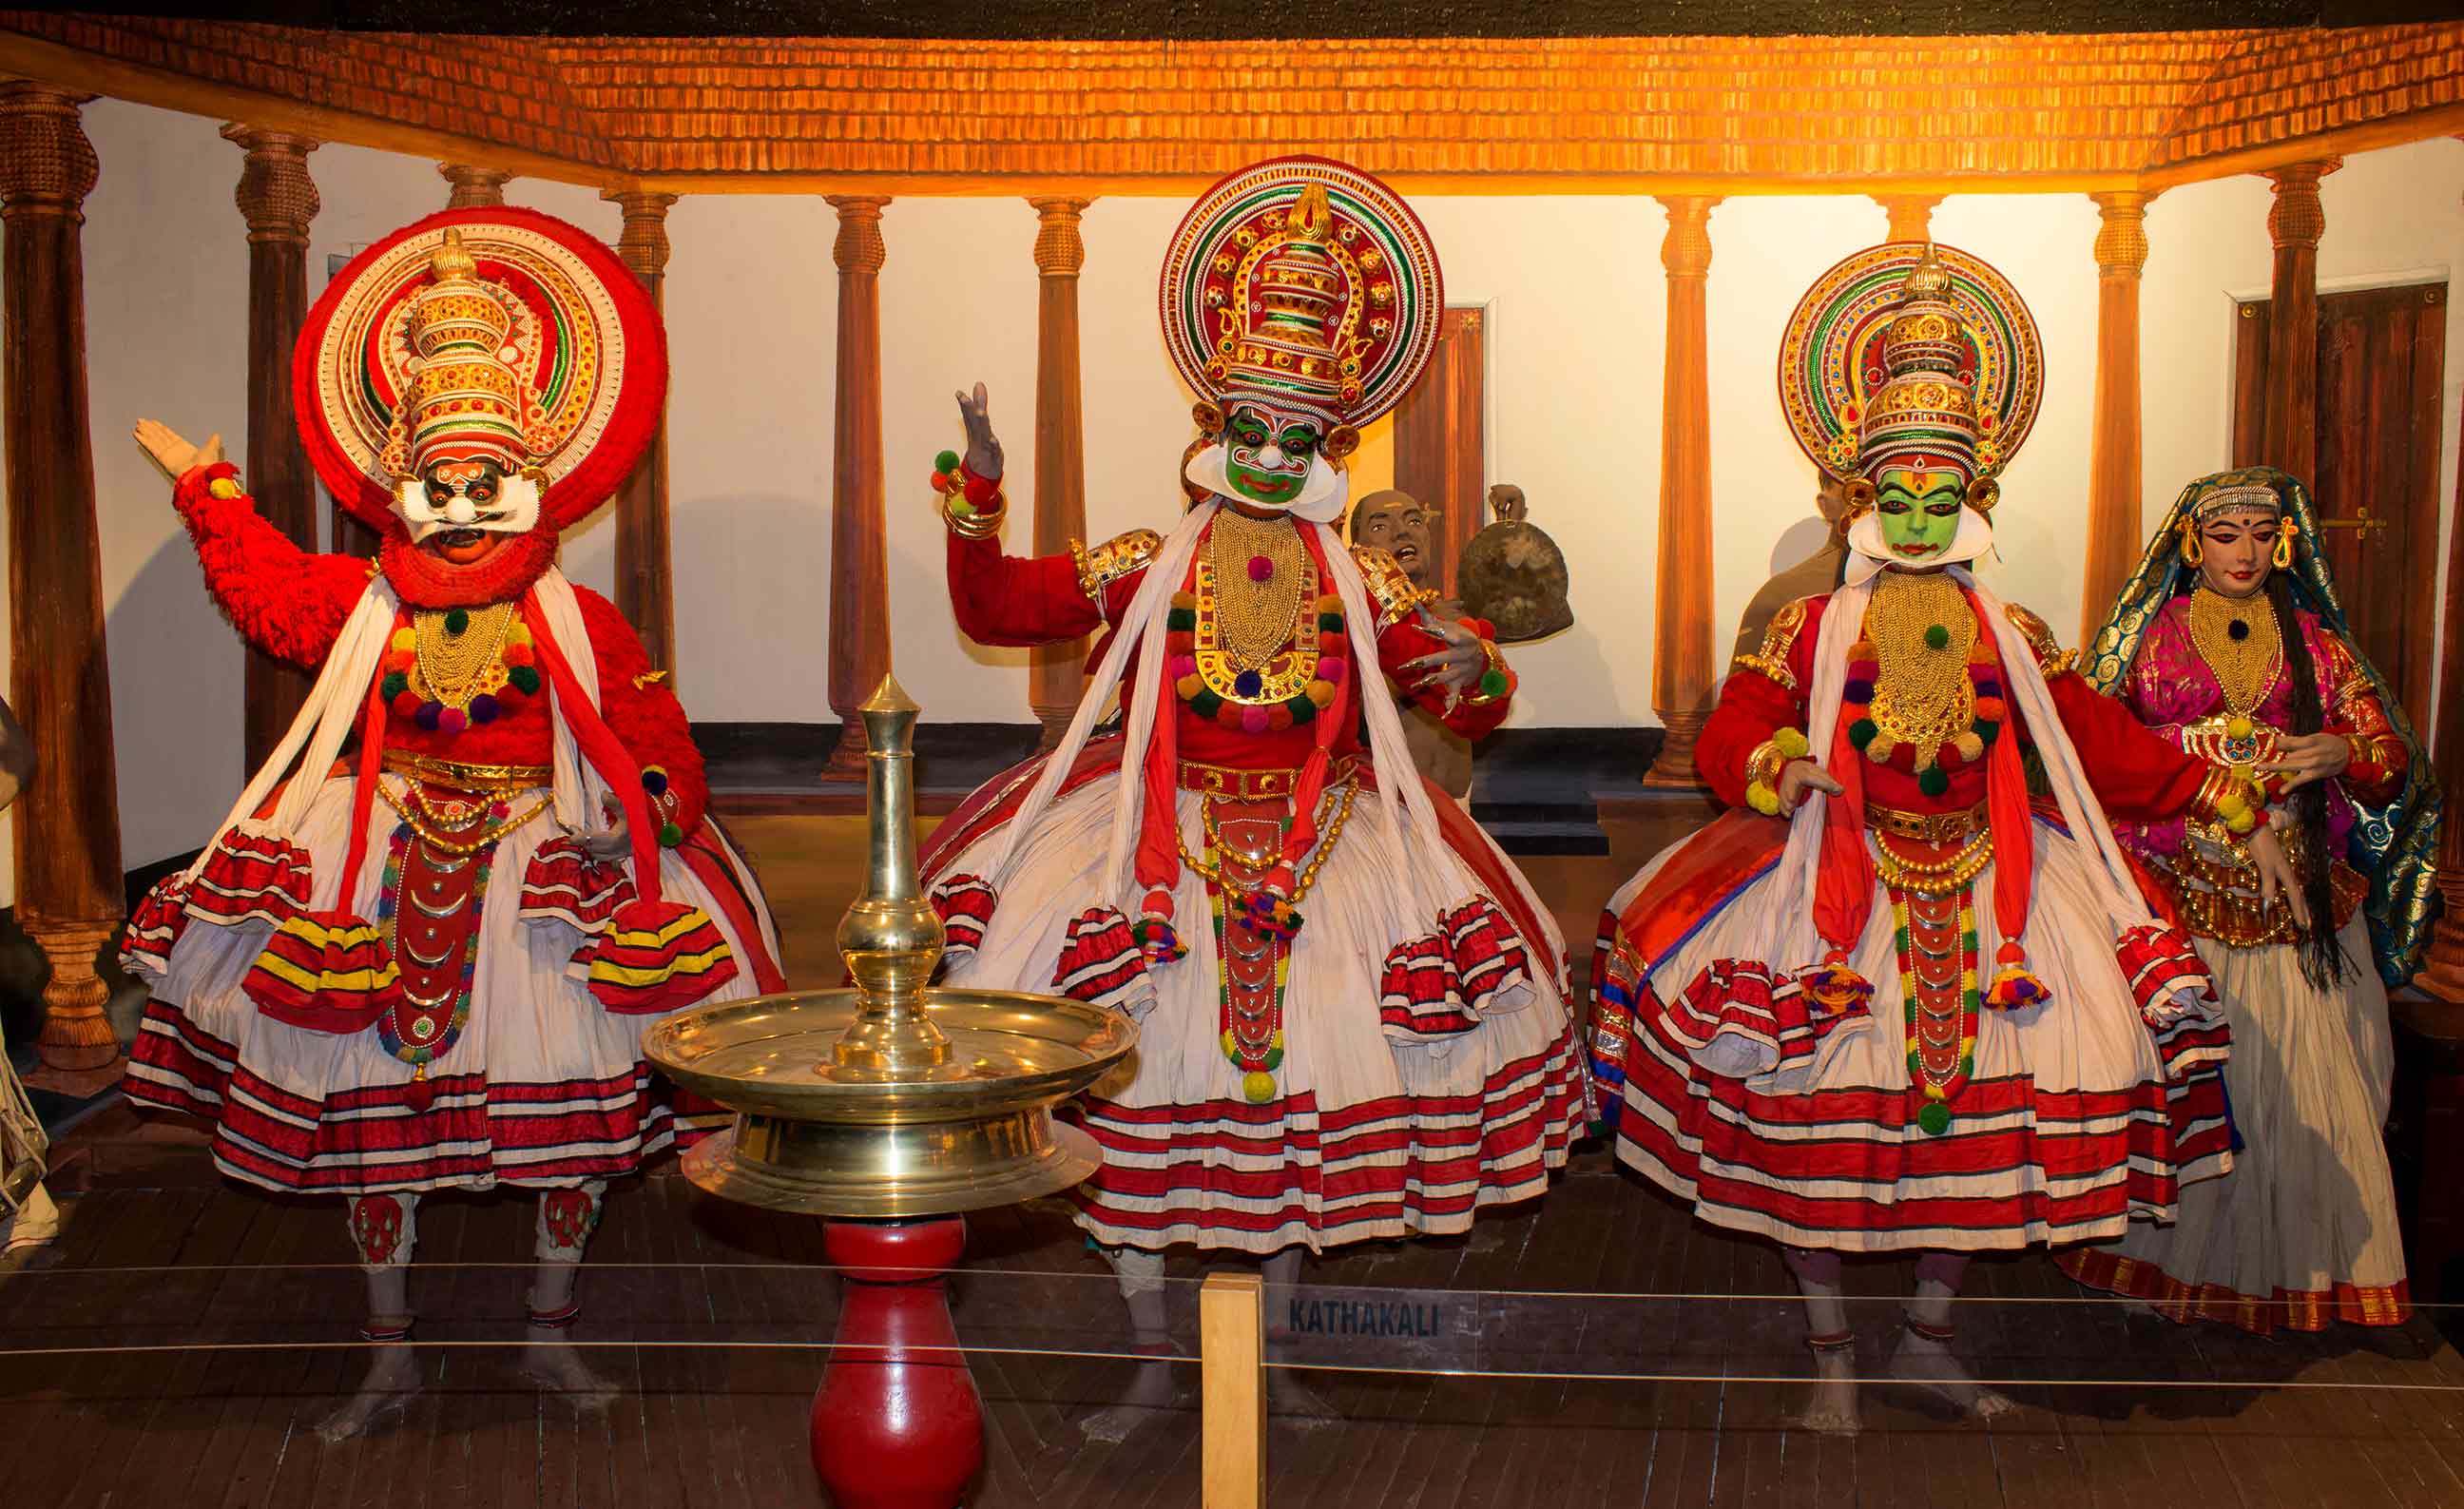 Kathakali figurines depicting a dance scene